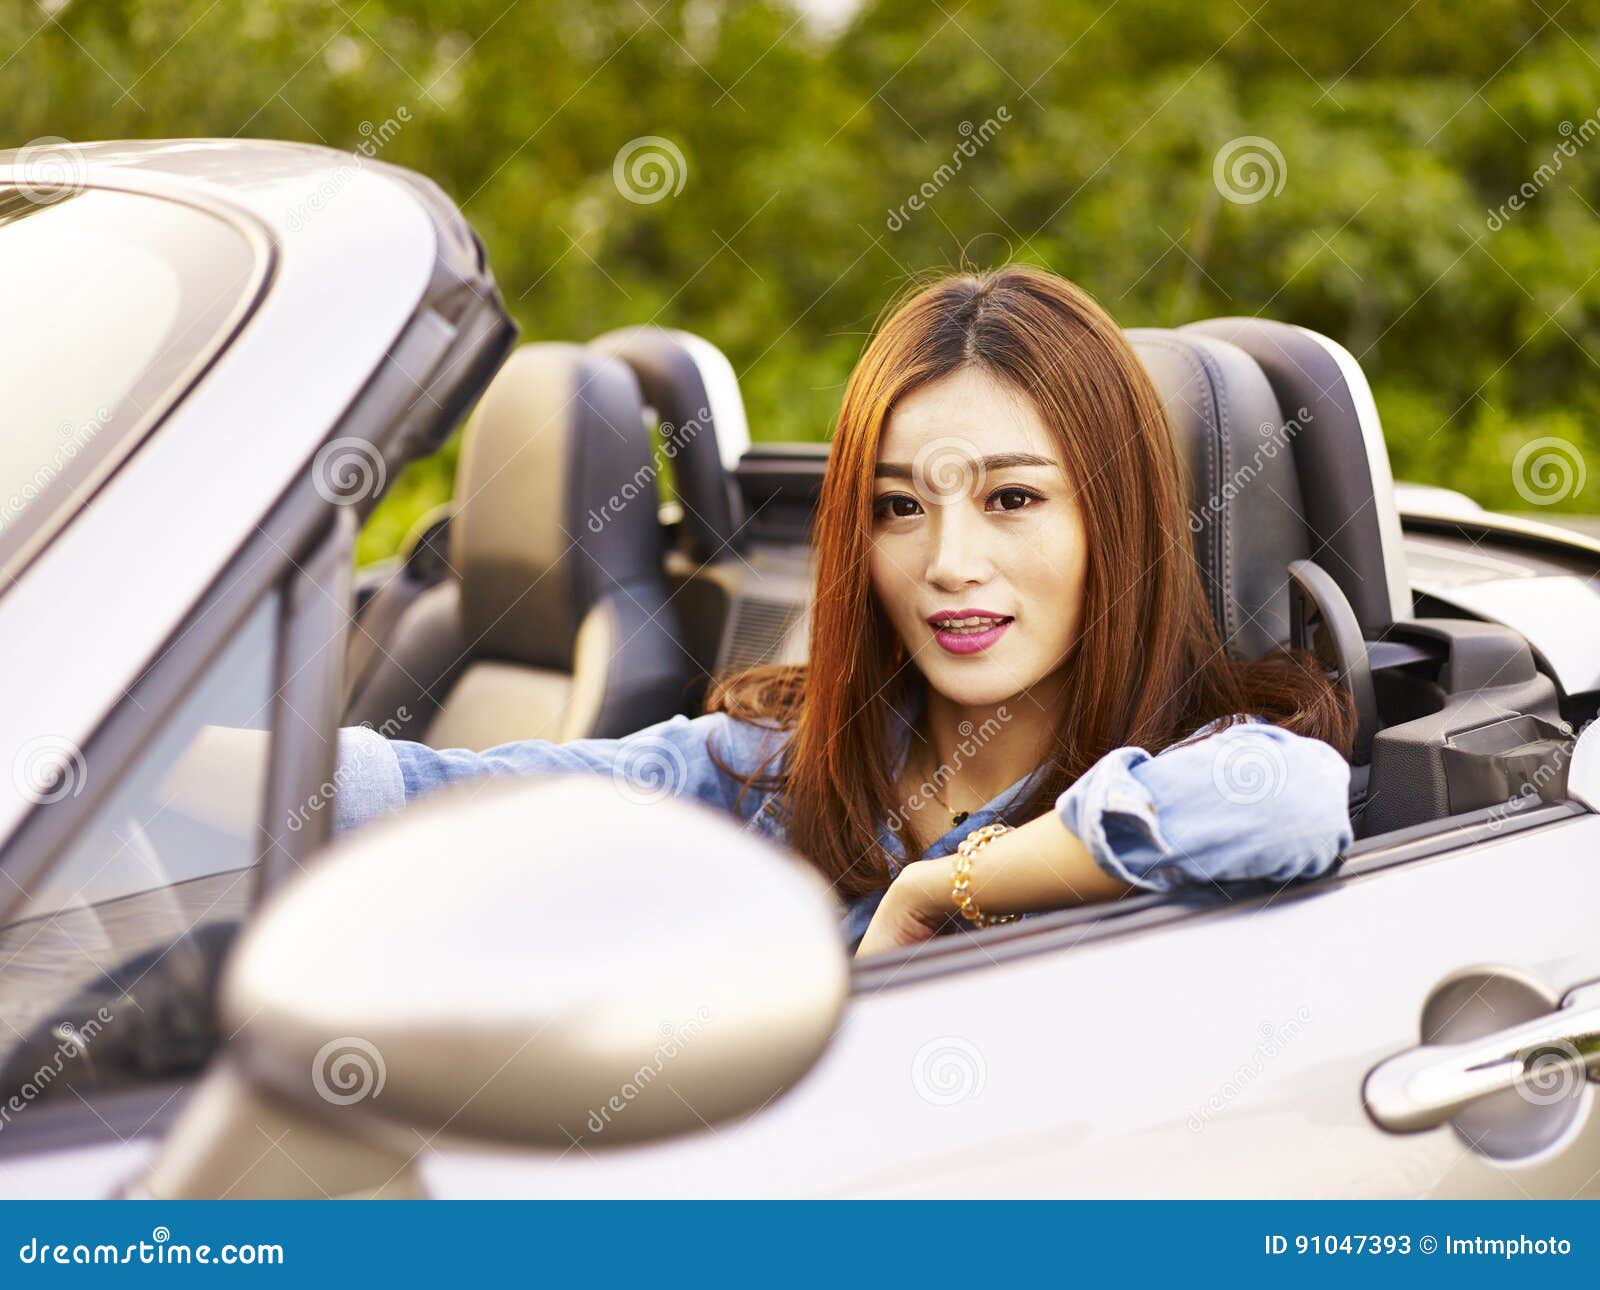 Riding in my sports car. Азиаты едут в машине. So young машина. Азиаточки едут за тобой. Азиаты едут на машине и доливают бензин.